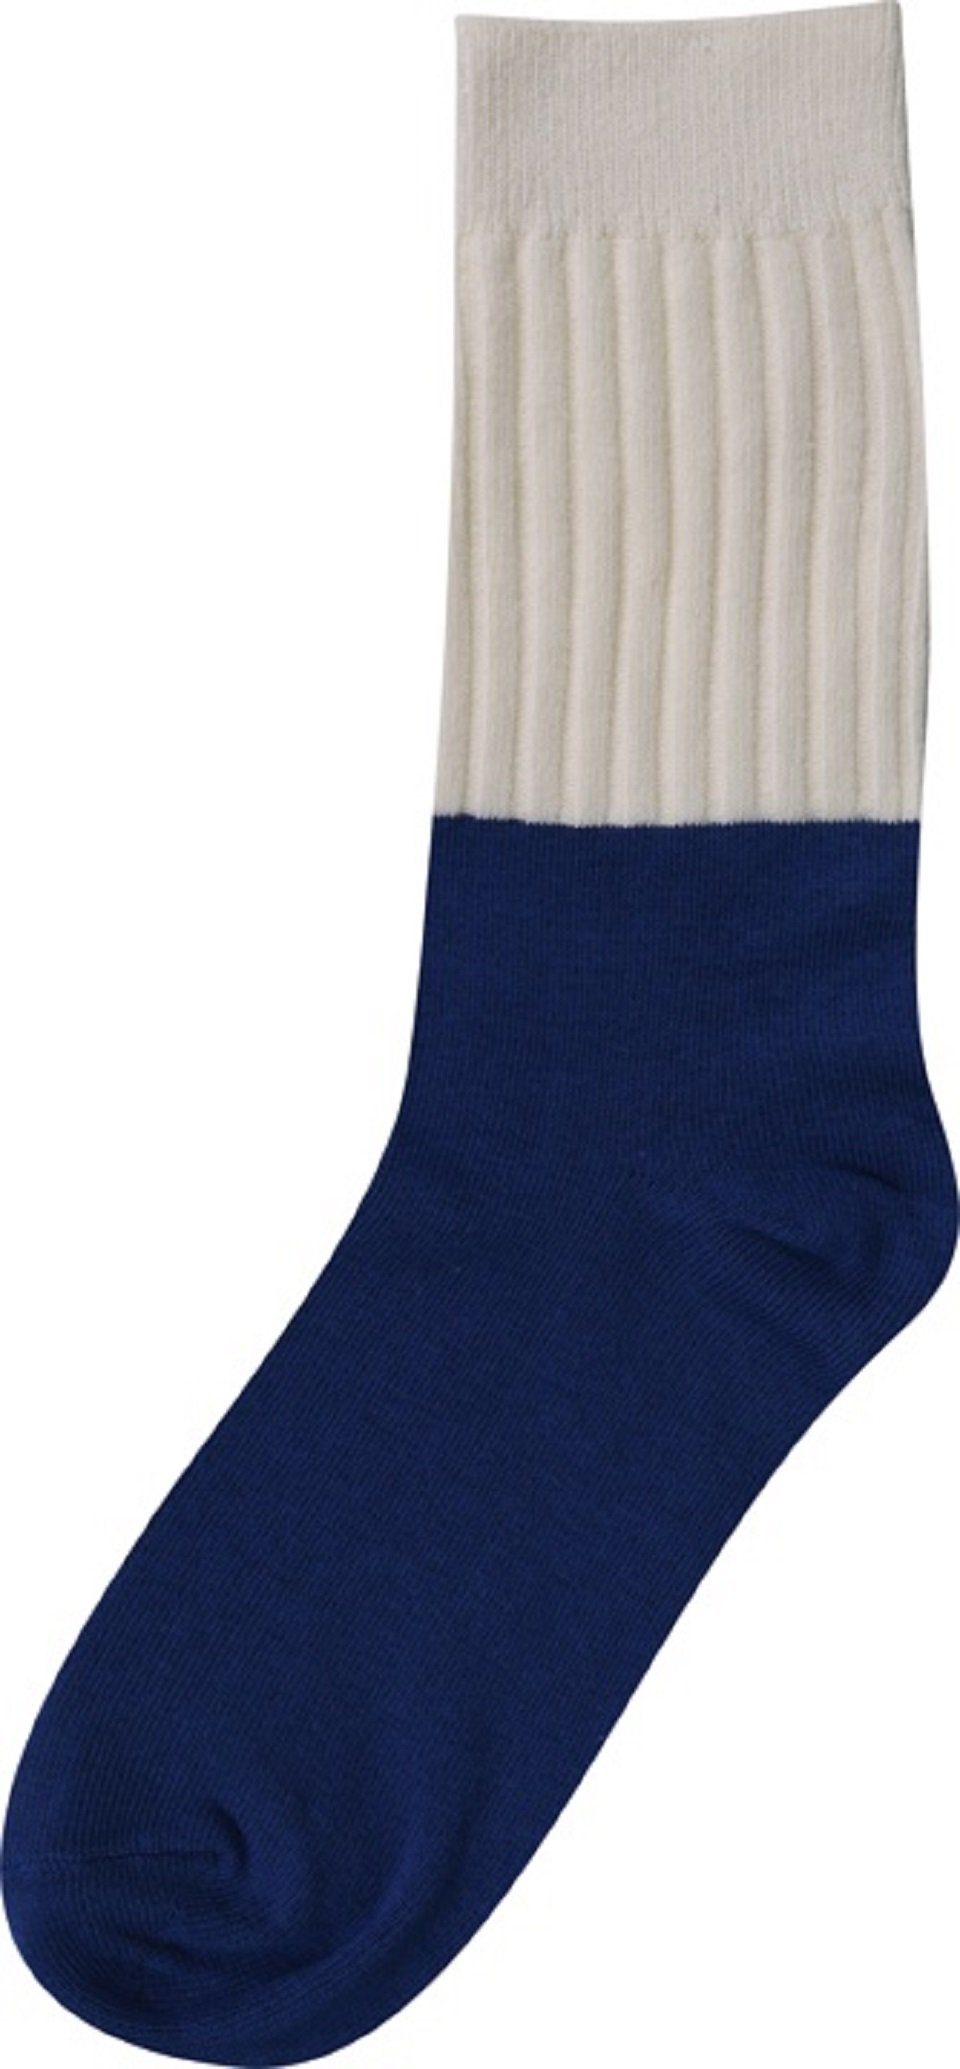 Capelli York blau Socken 2x New Socken Unisex